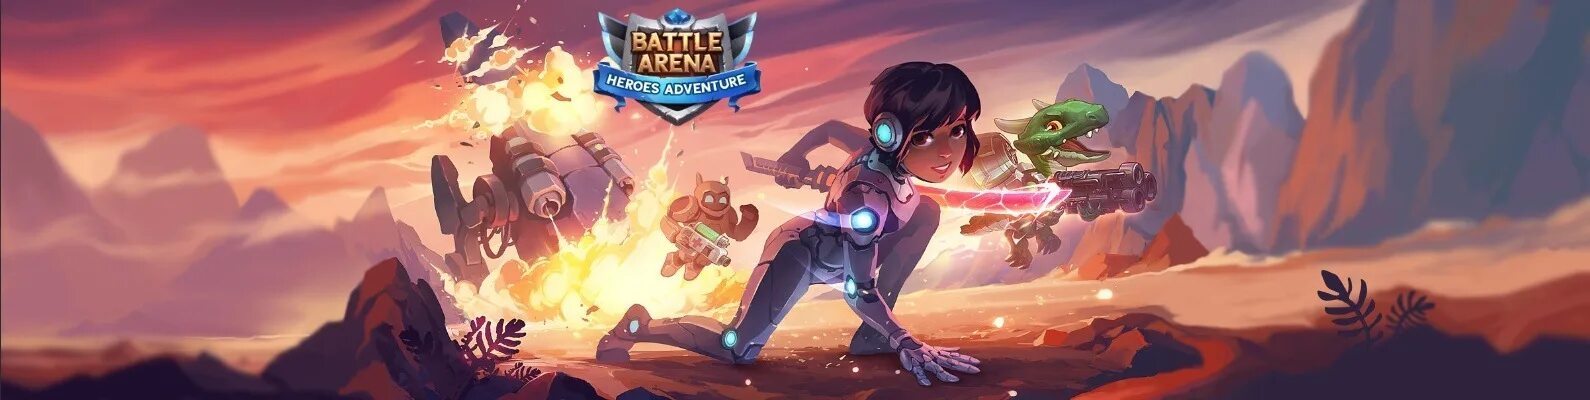 Battle core. Battle Arena: битвы героев!. Battle Arena Heroes Adventure. Батл Арена. Игра Battle Arena Heroes Adventures.